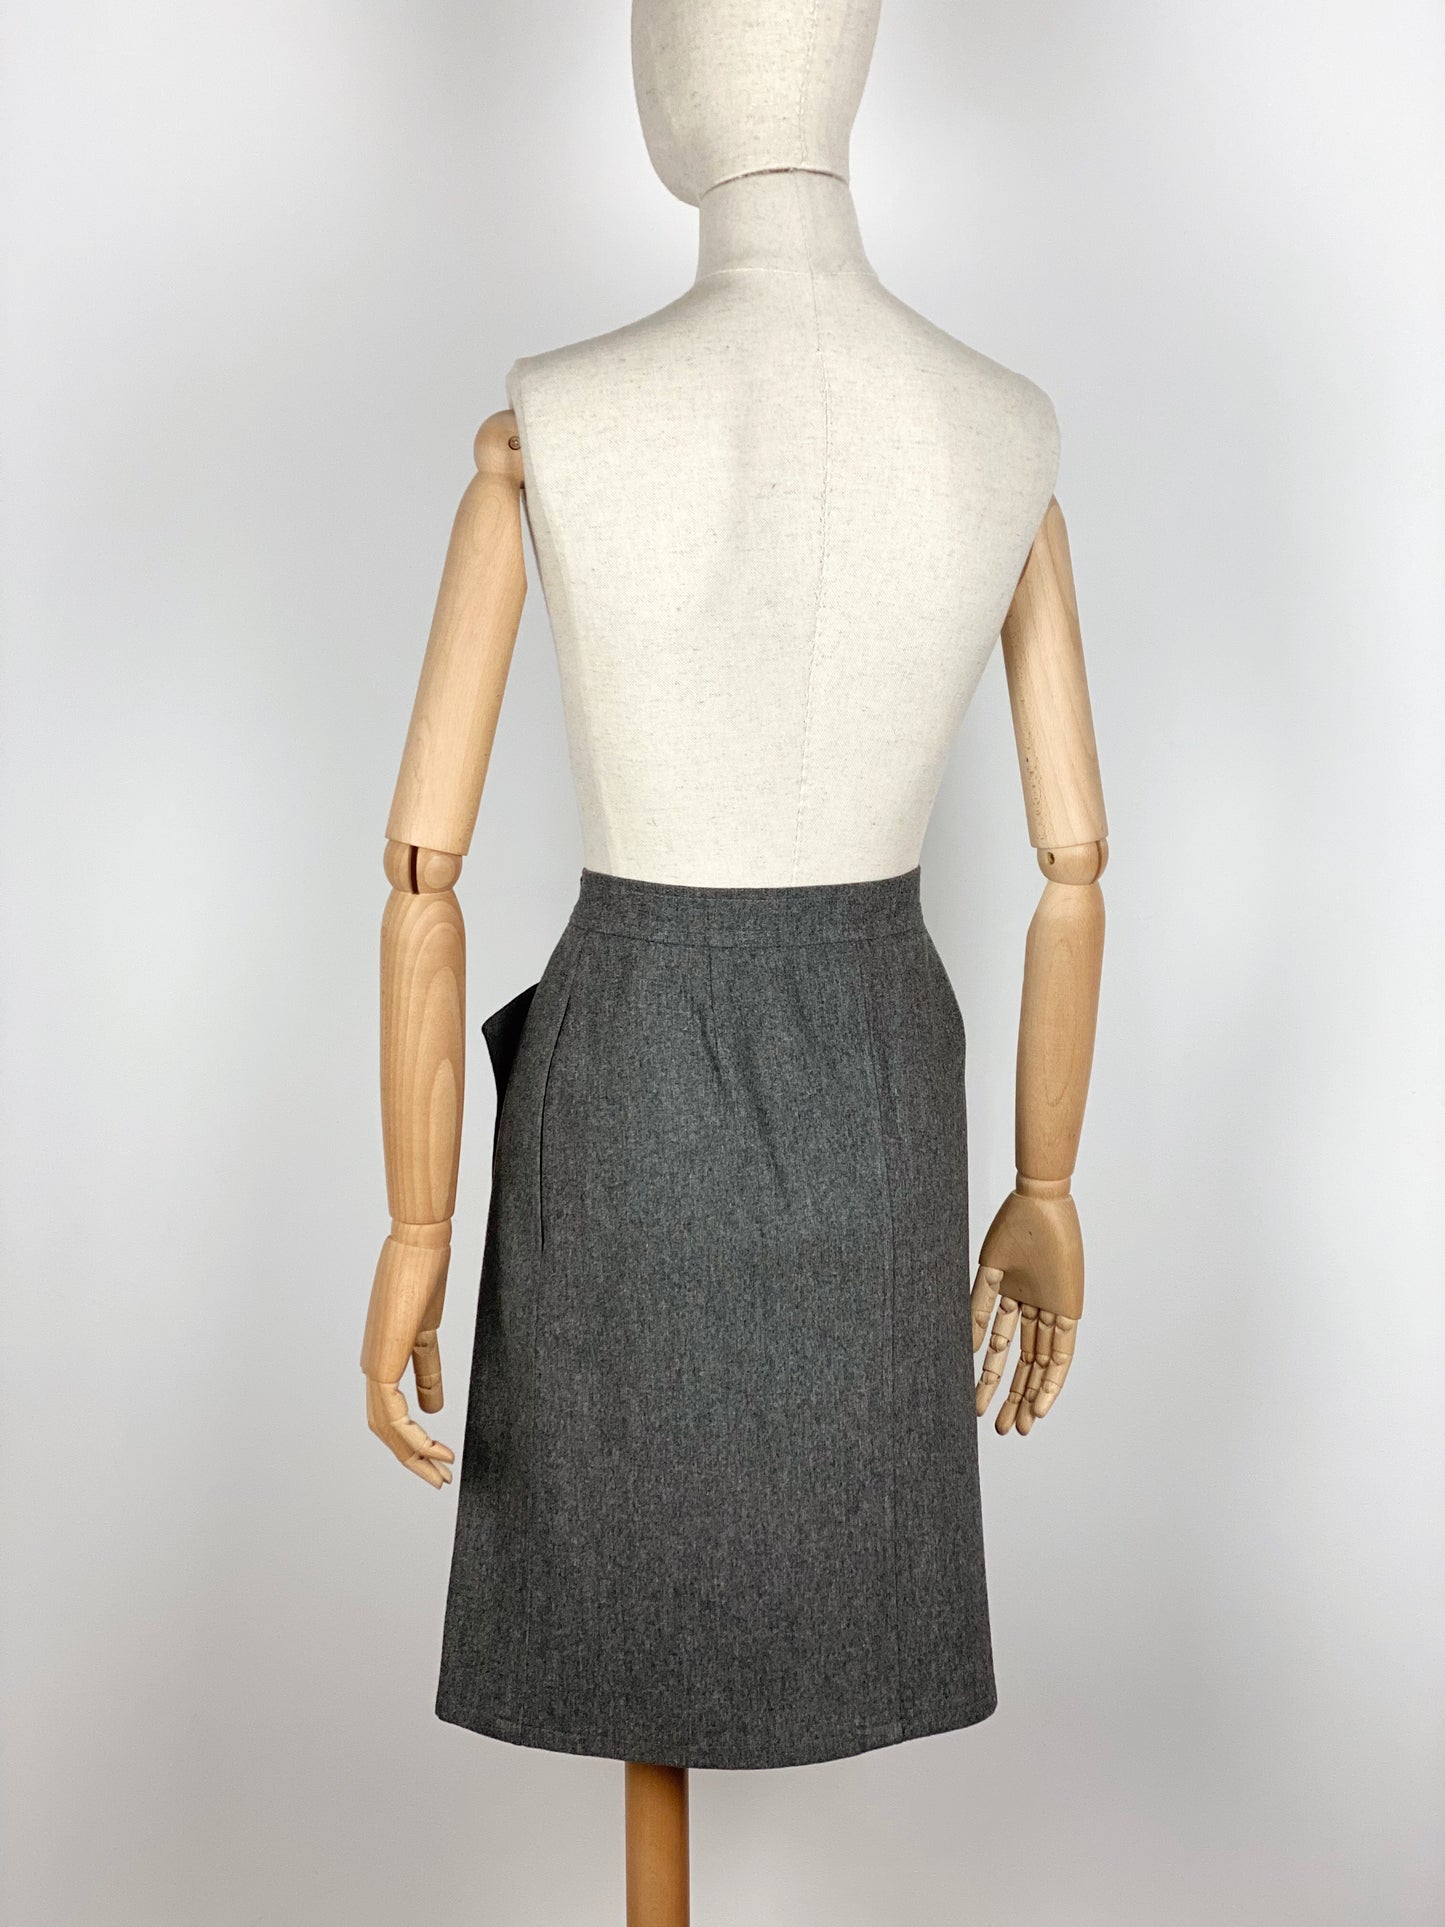 Vintage Gray Woolen Skirt by Yves Saint Laurent